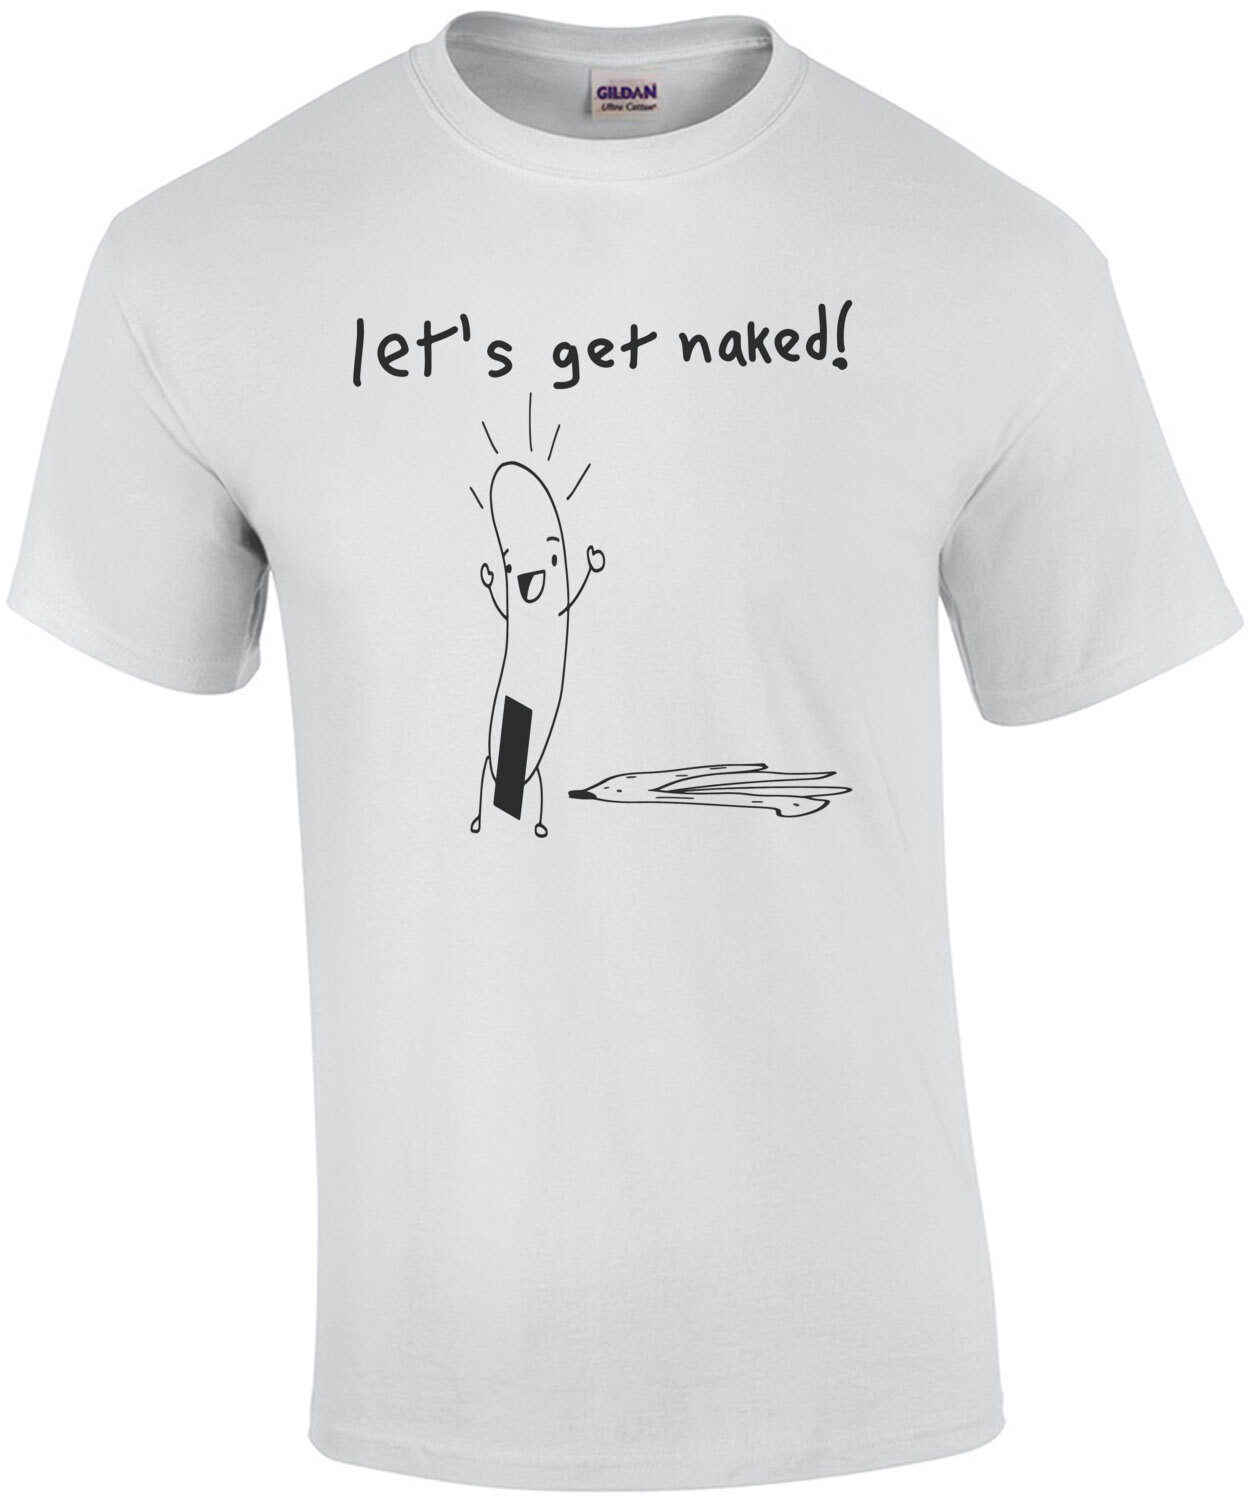 let's get naked! funny t-shirt